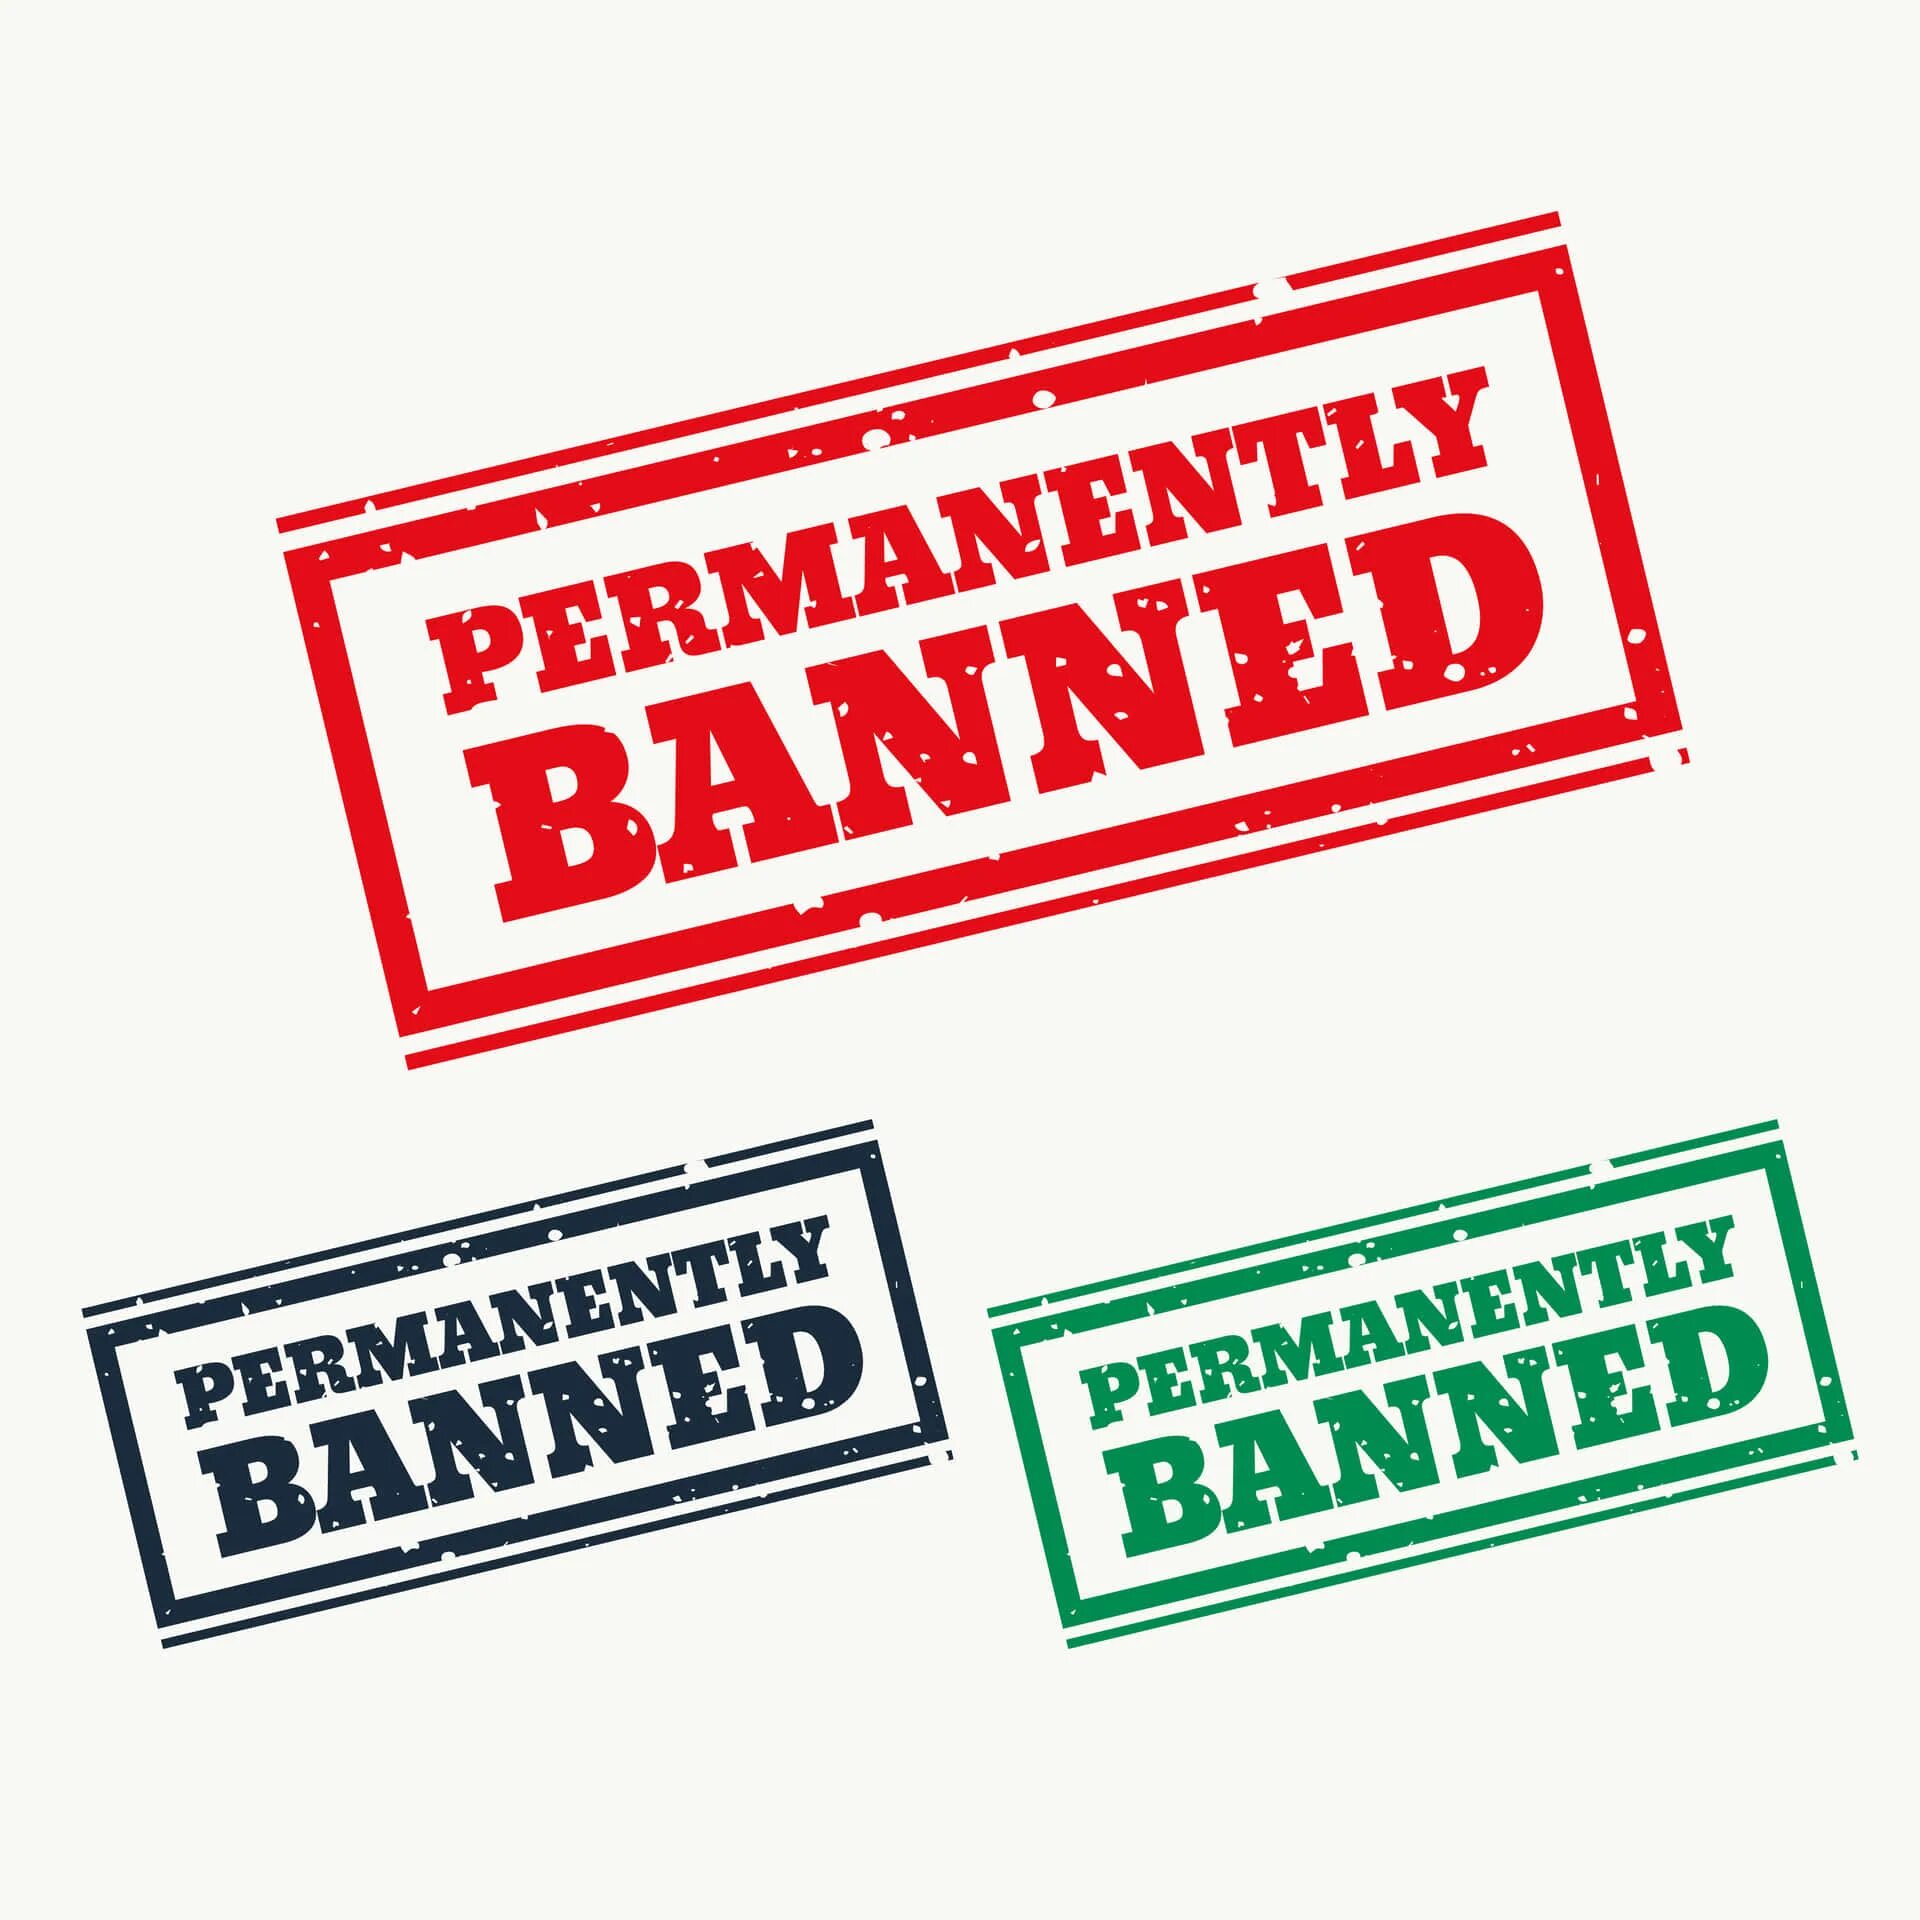 Permanently перевод. Permanently banned. Штамп запрещено. Banned штамп. Permanent ban.